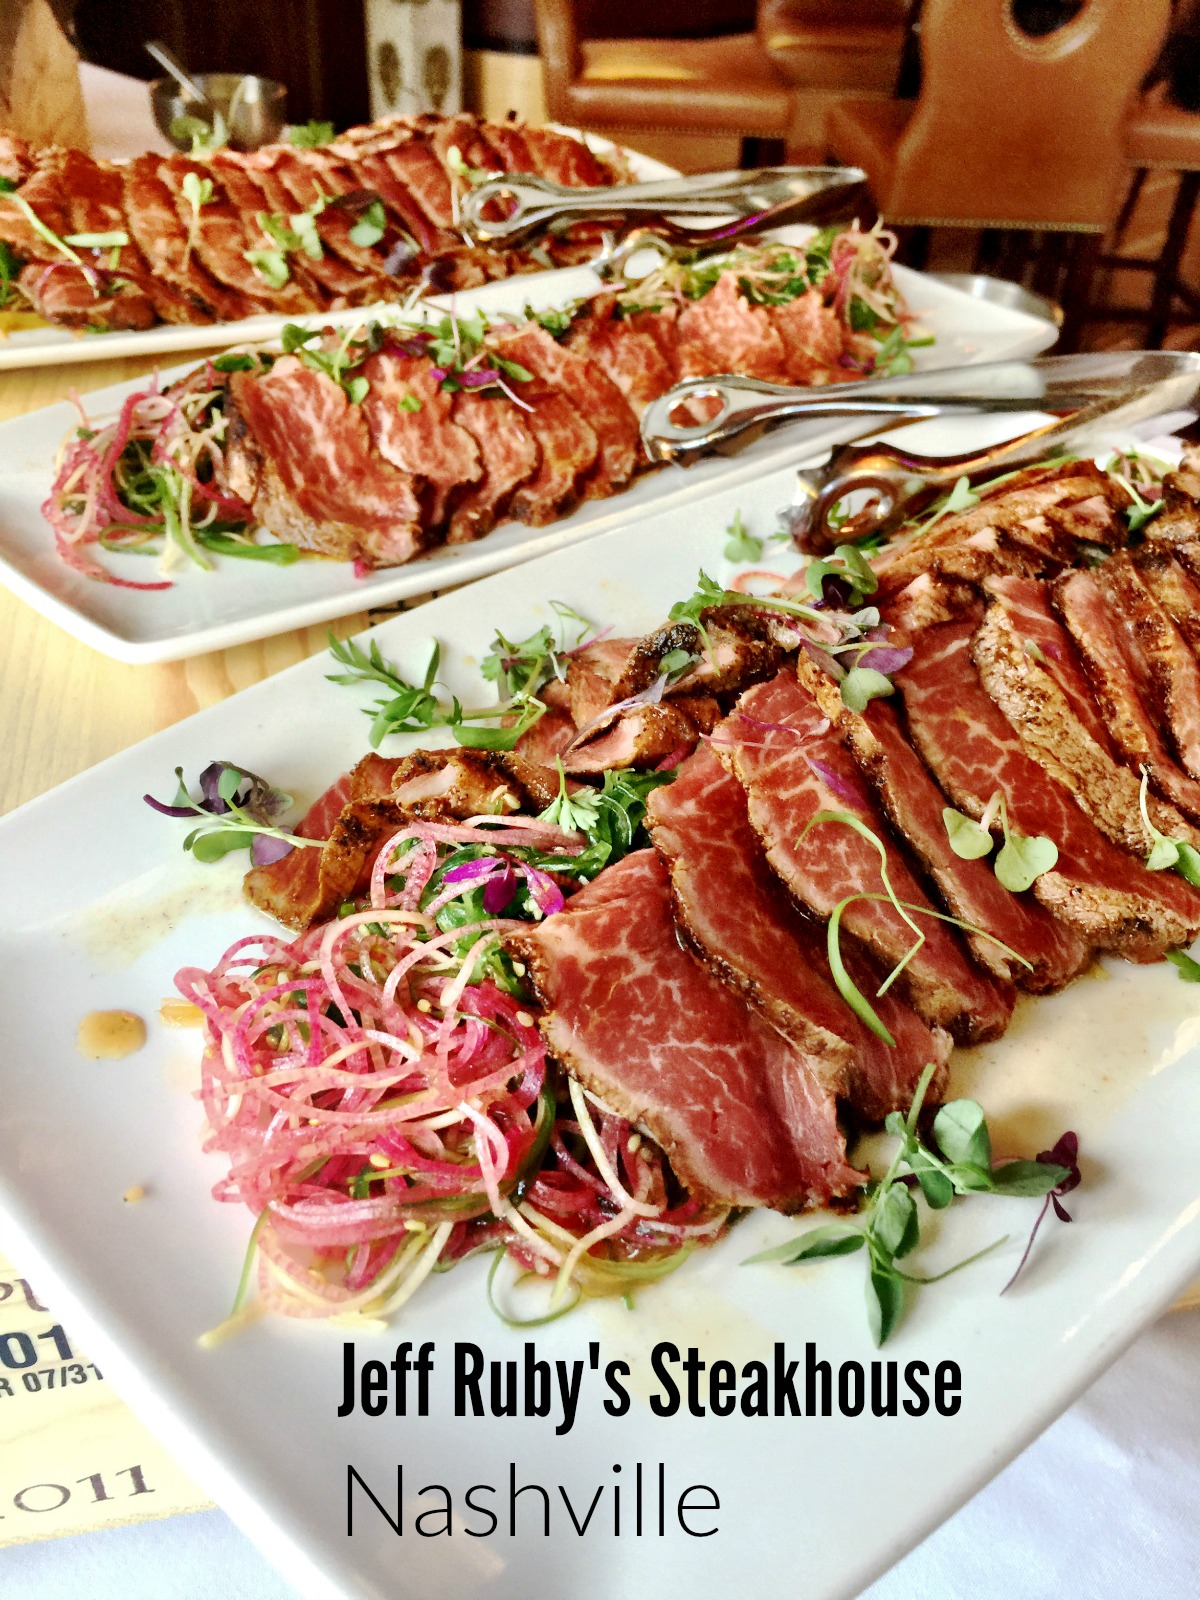 Jeff Ruby’s Nashville, a Premier Steakhouse